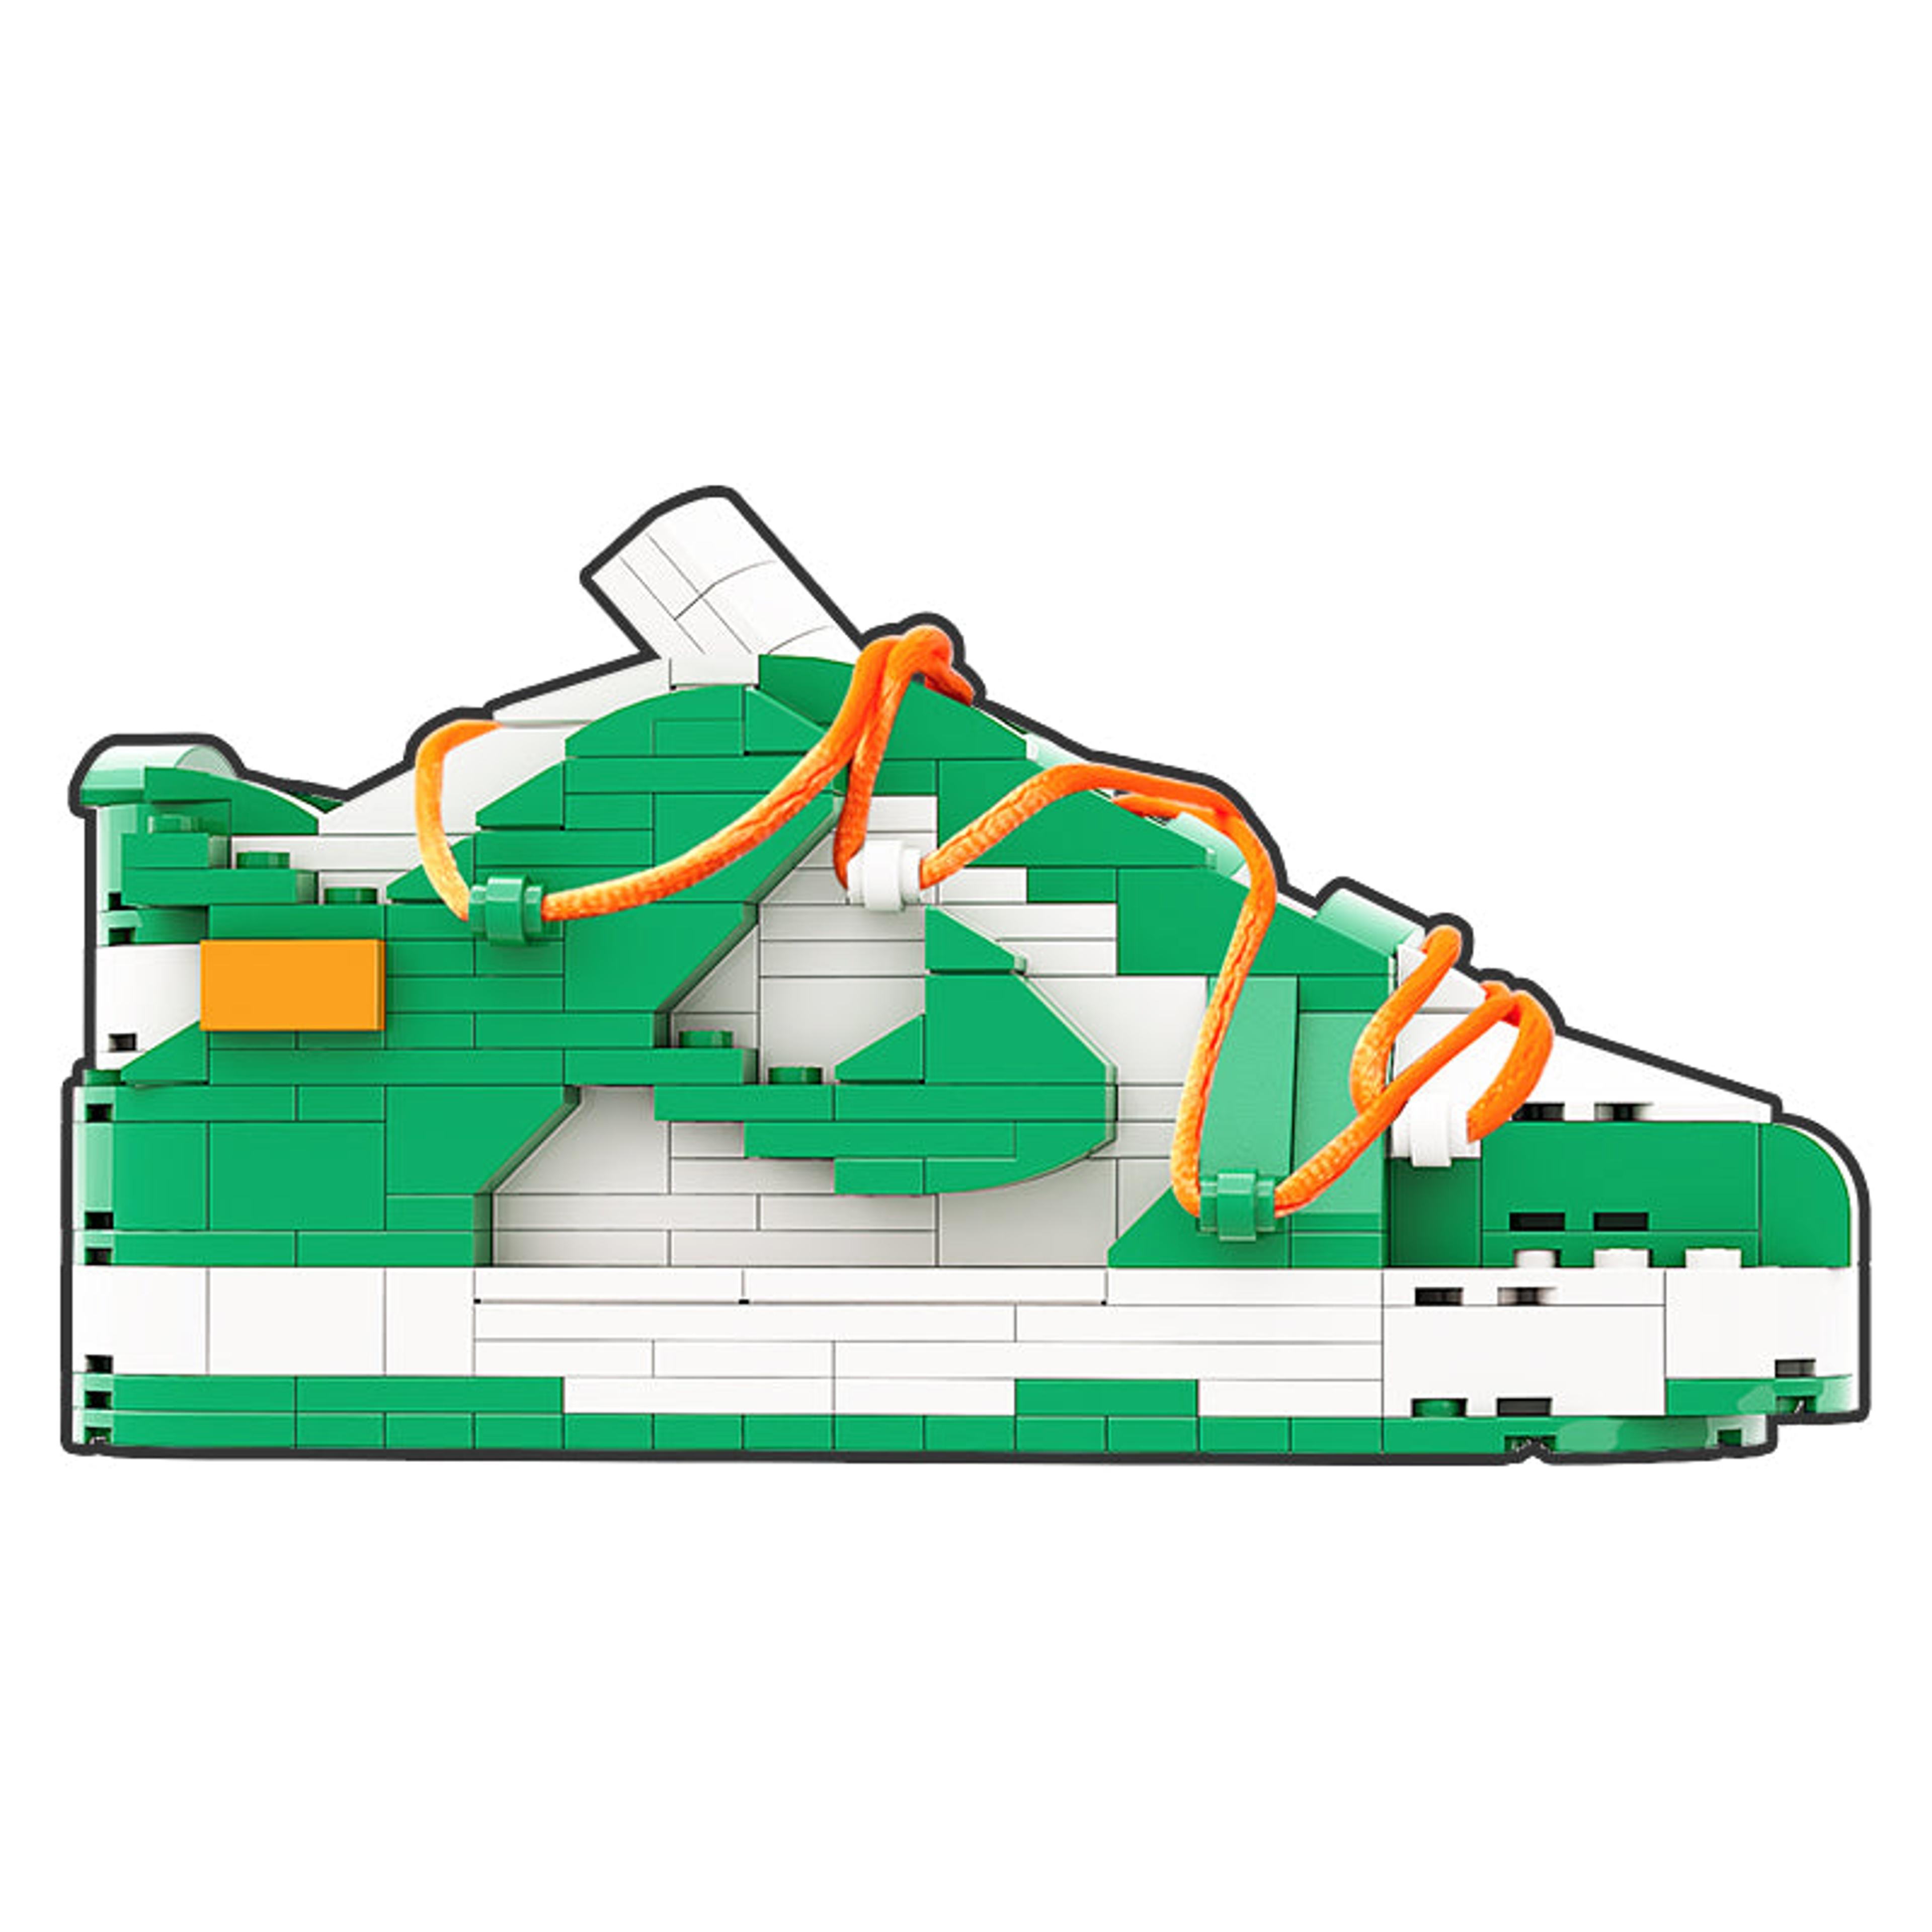 Alternate View 4 of REGULAR  "SB Dunk Off-White Pine Green" Sneaker Bricks with Mini